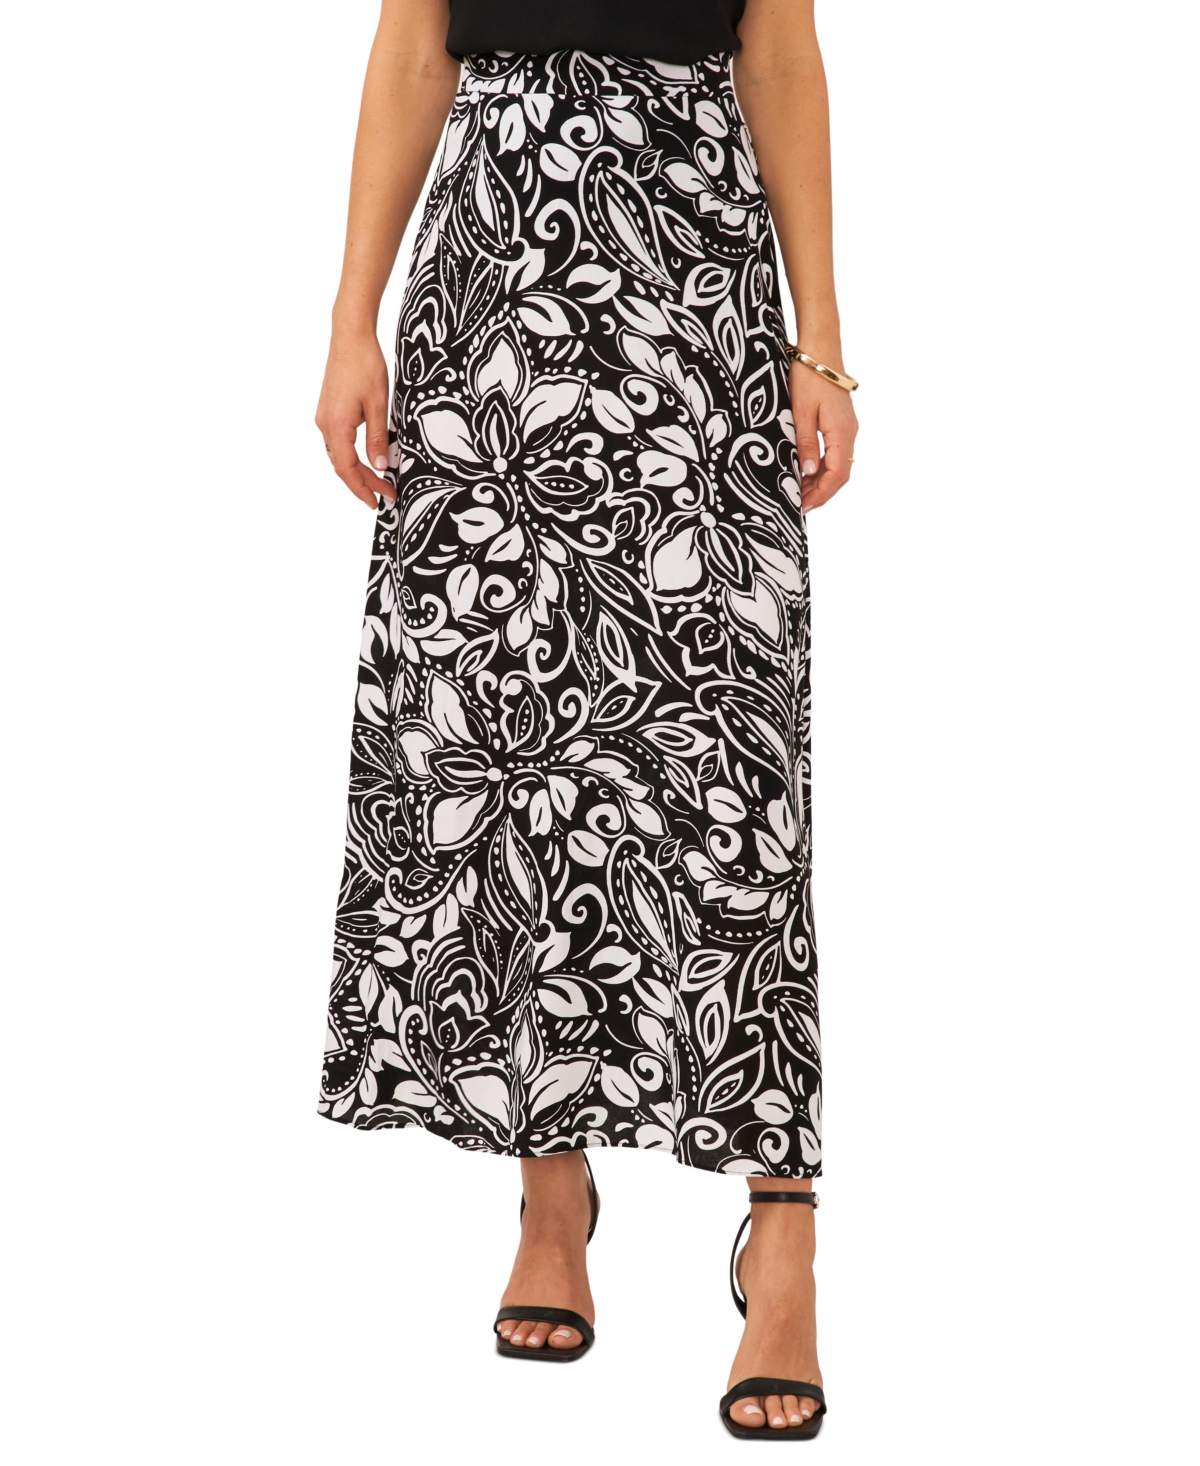 Women's A-Line Floral Print Maxi Skirt - Rich Black